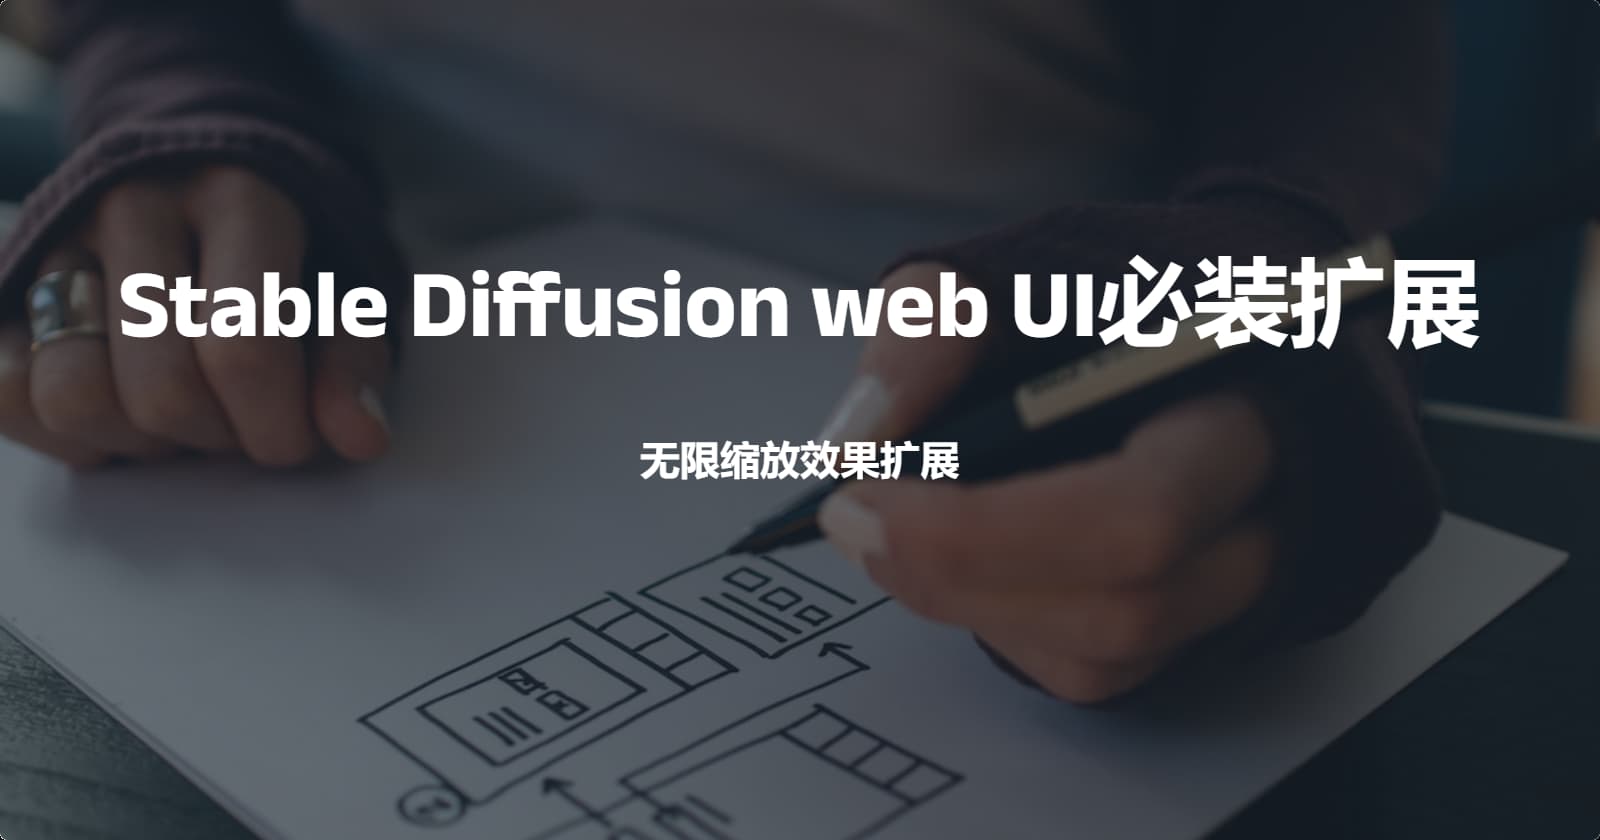 Stable Diffusion web UI必装扩展-无限缩放效果扩展